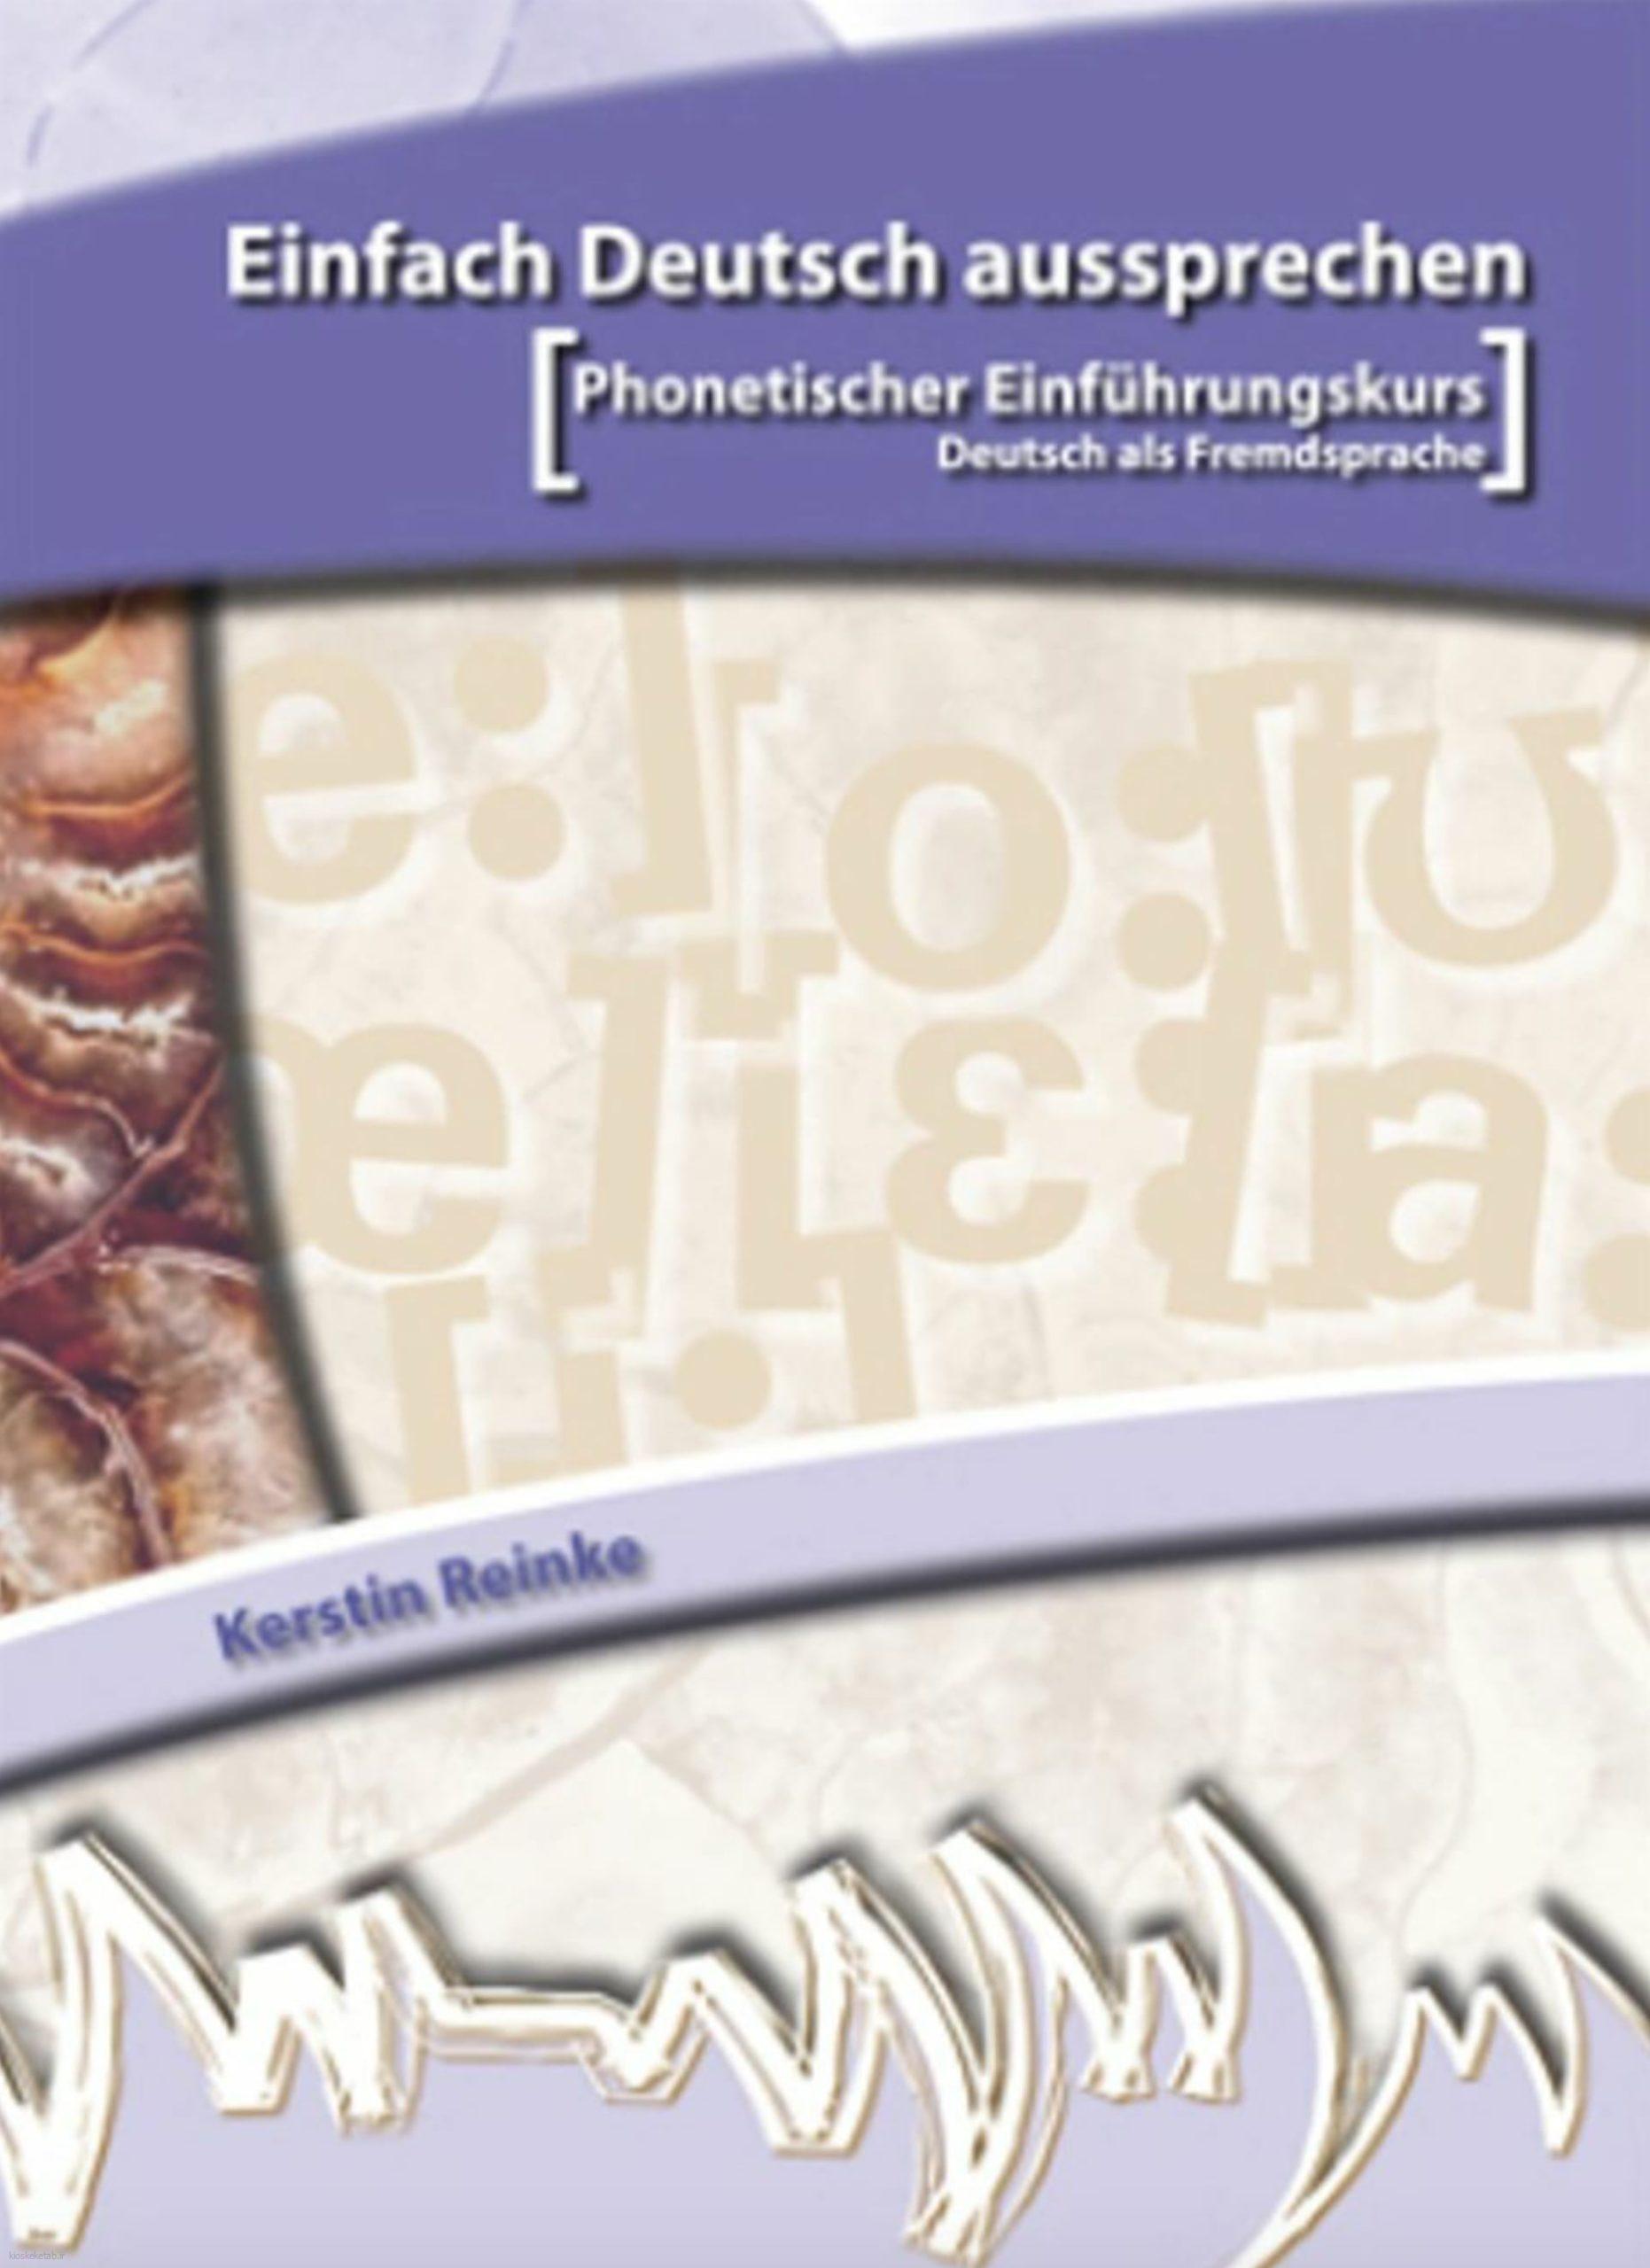 دانلود کتاب آلمانی einfach deutsch aussprechen